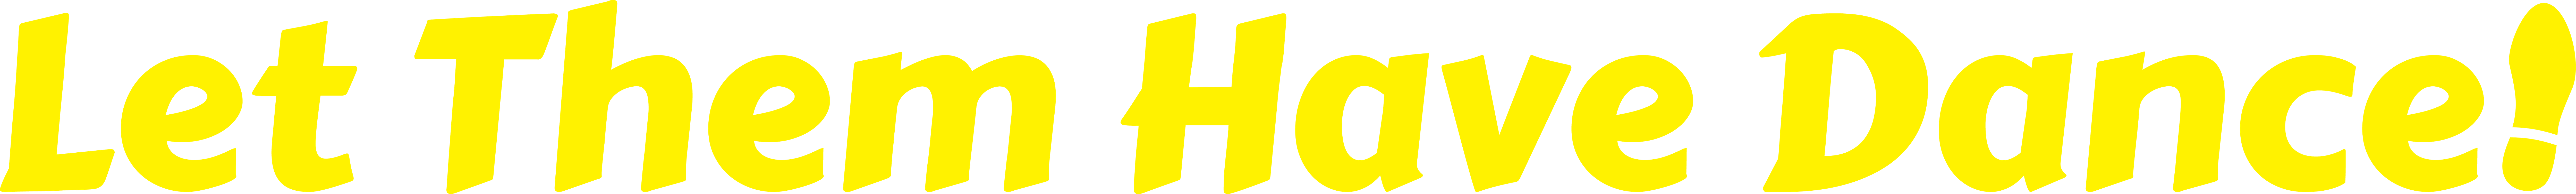 Let Them Have Dance - Horizontal Logo